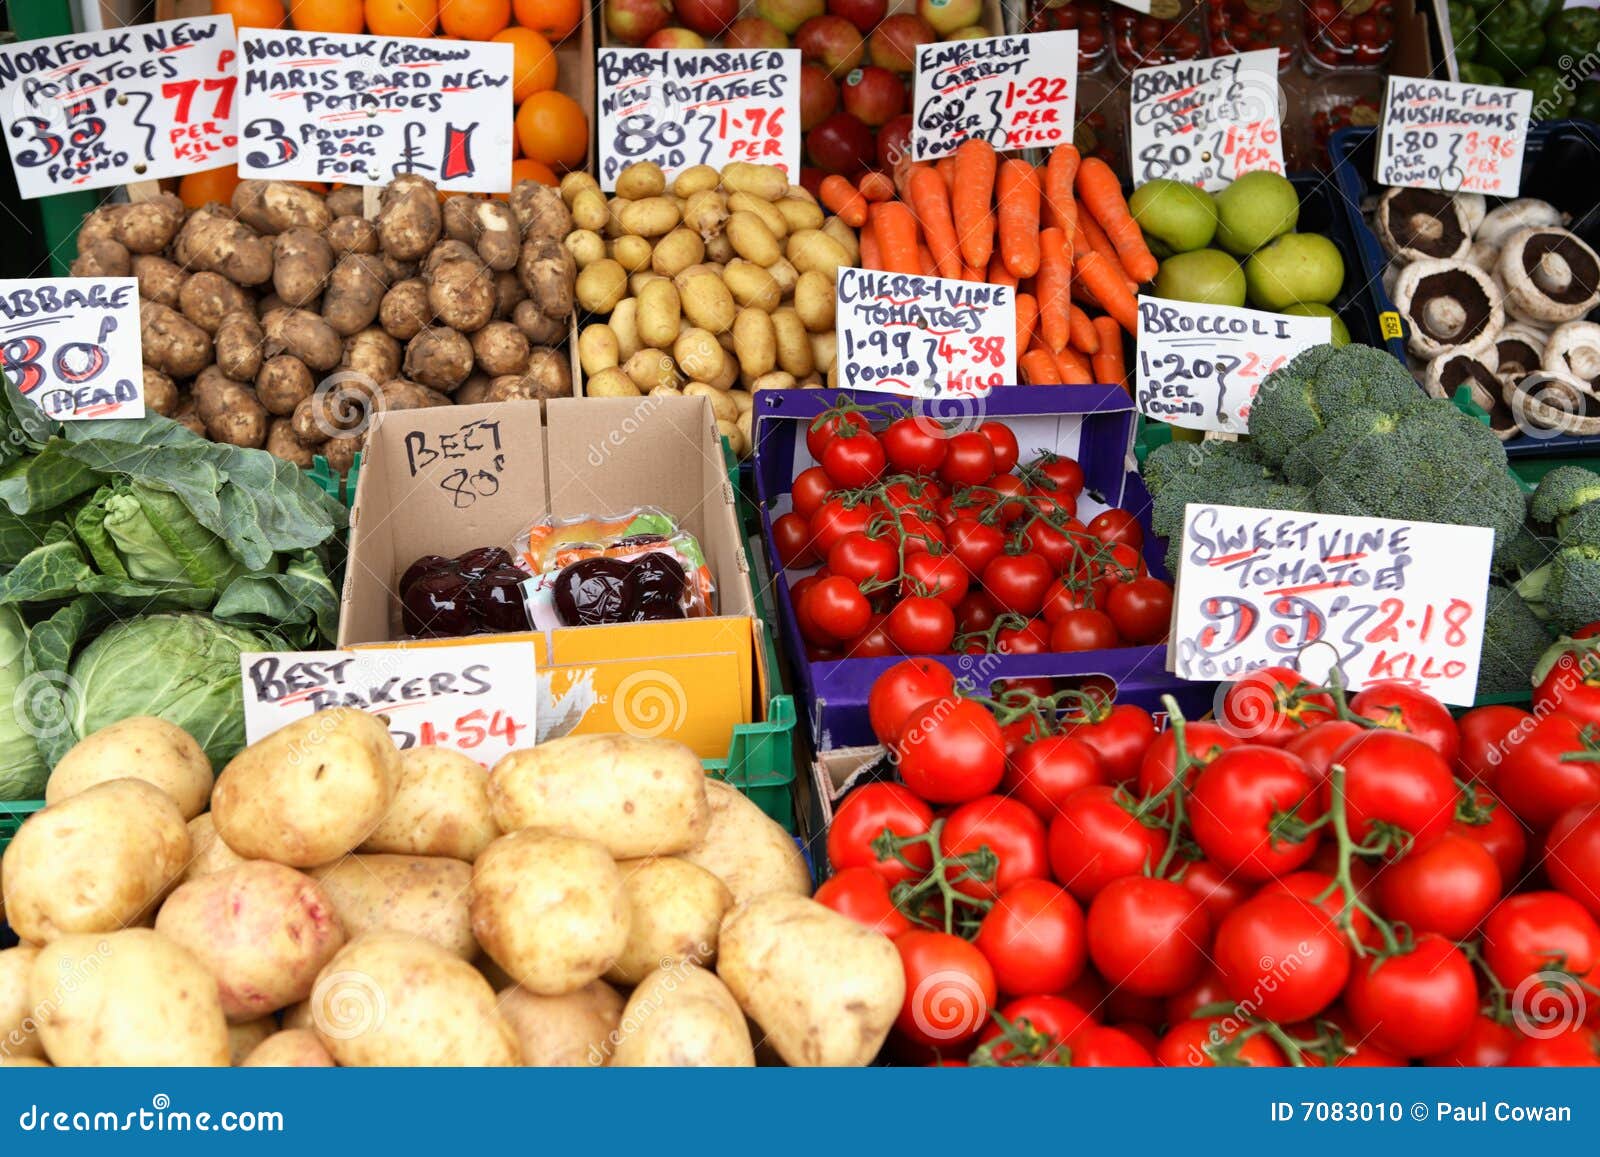 english market vegetable stall